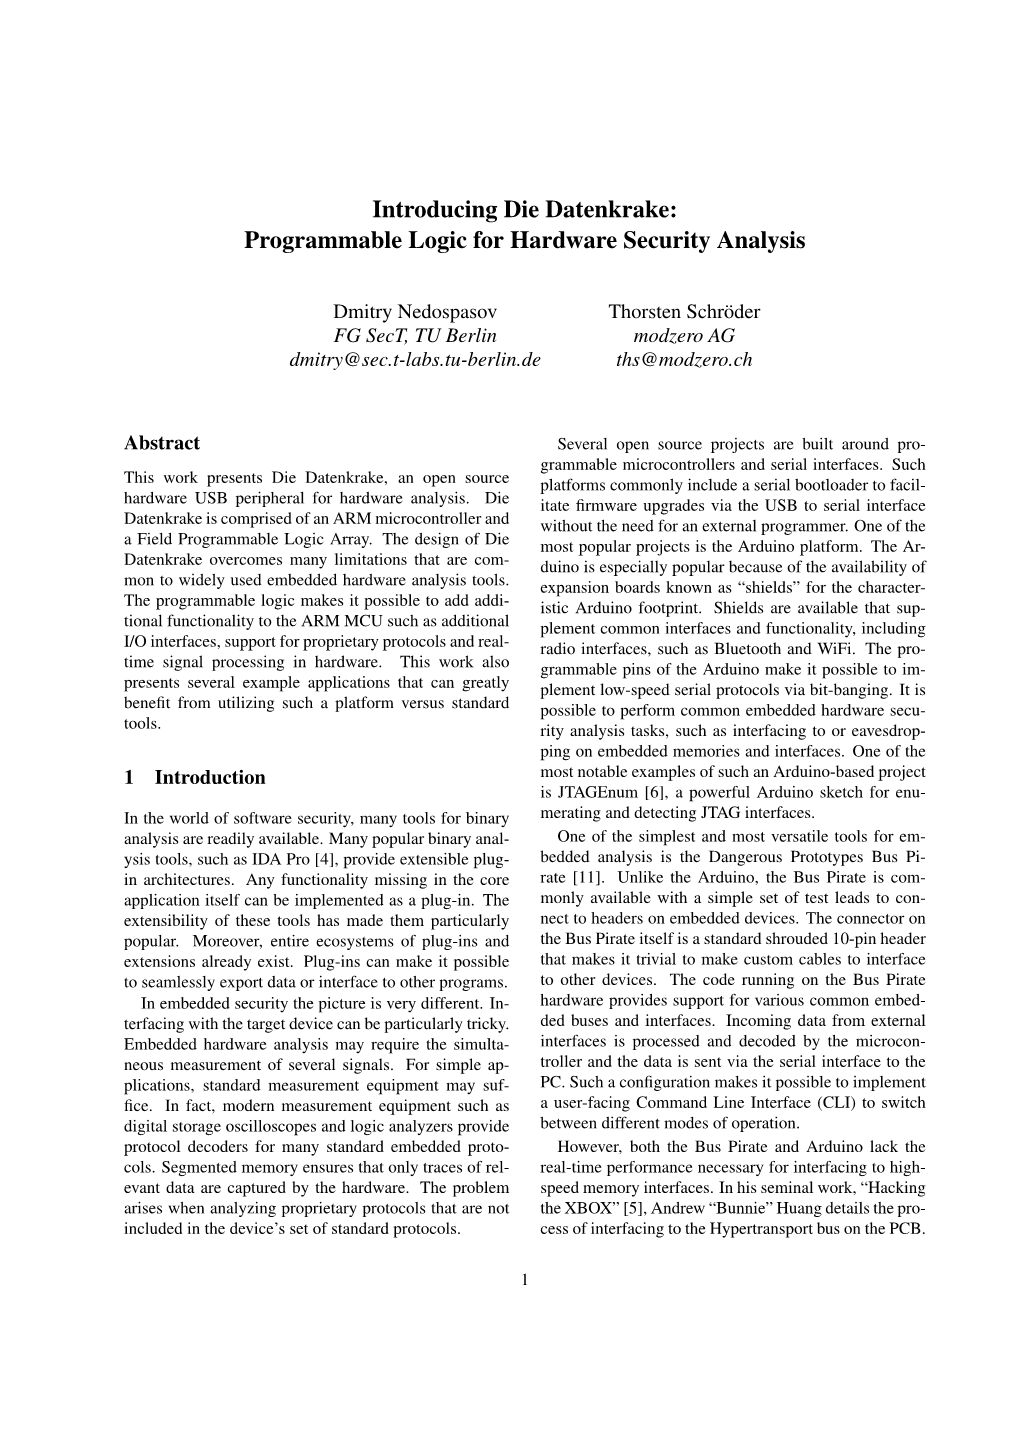 Introducing Die Datenkrake: Programmable Logic for Hardware Security Analysis